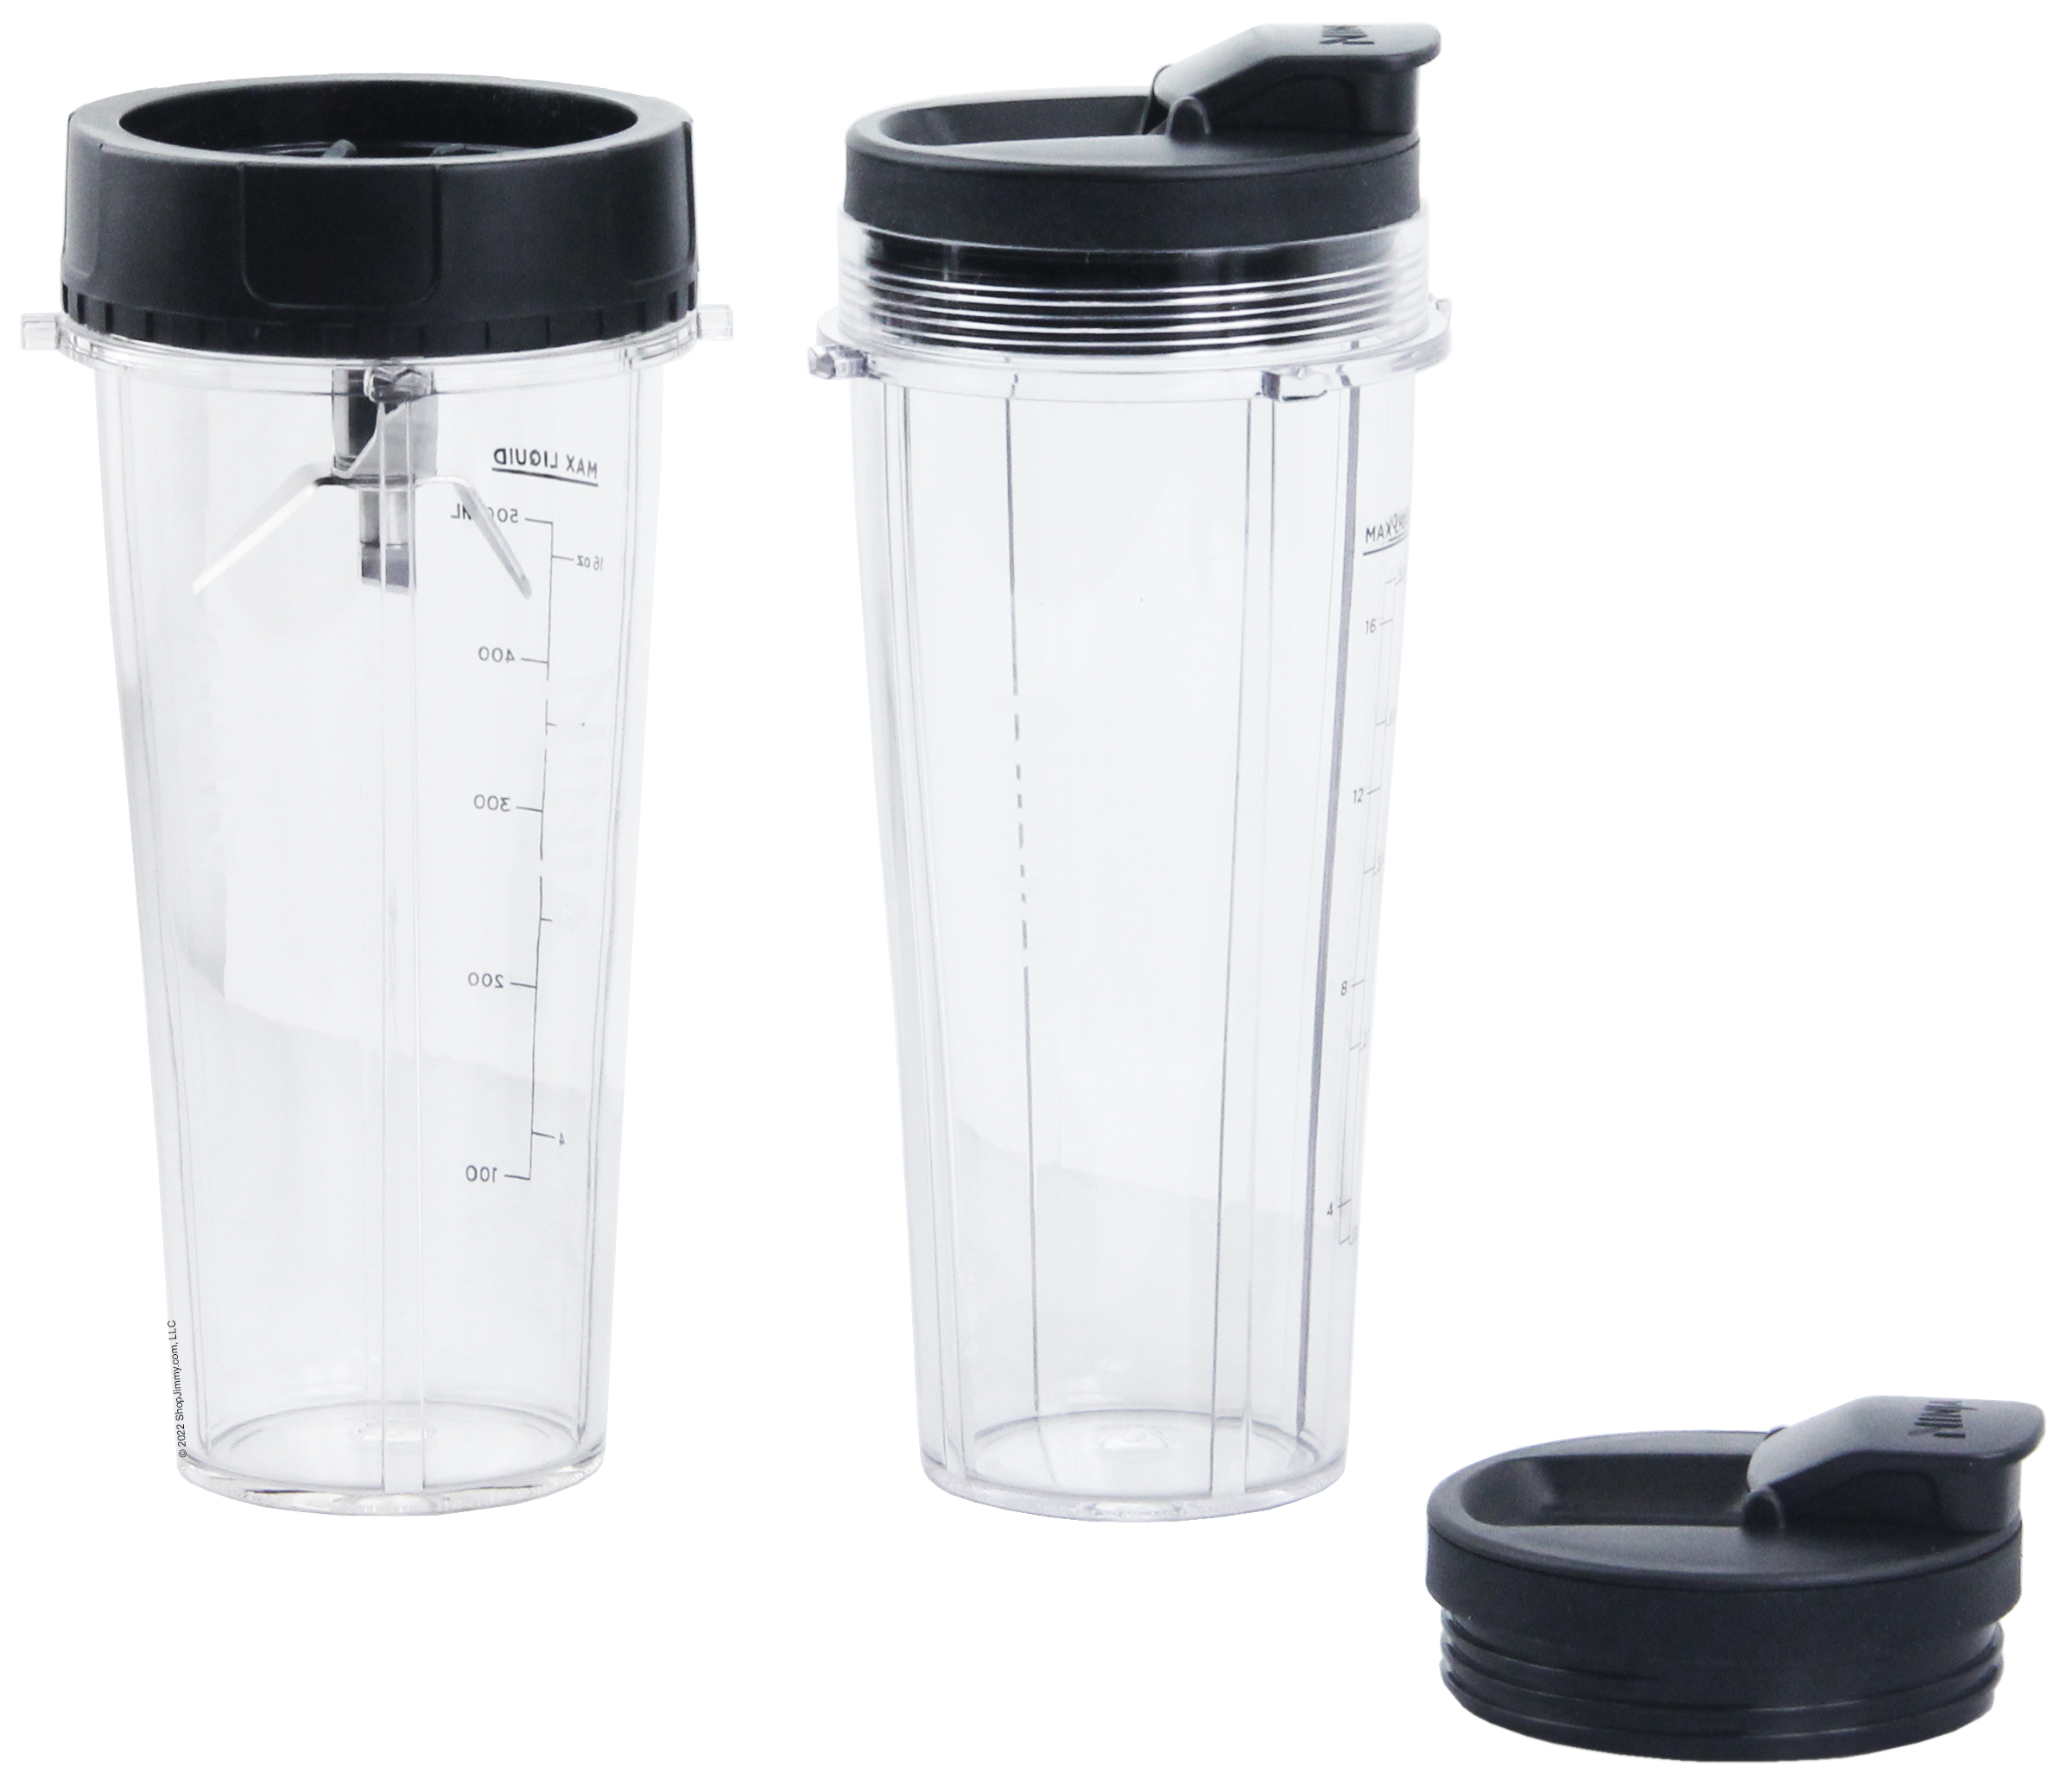 3 Nutri-Ninja Blender Cups and 31 similar items